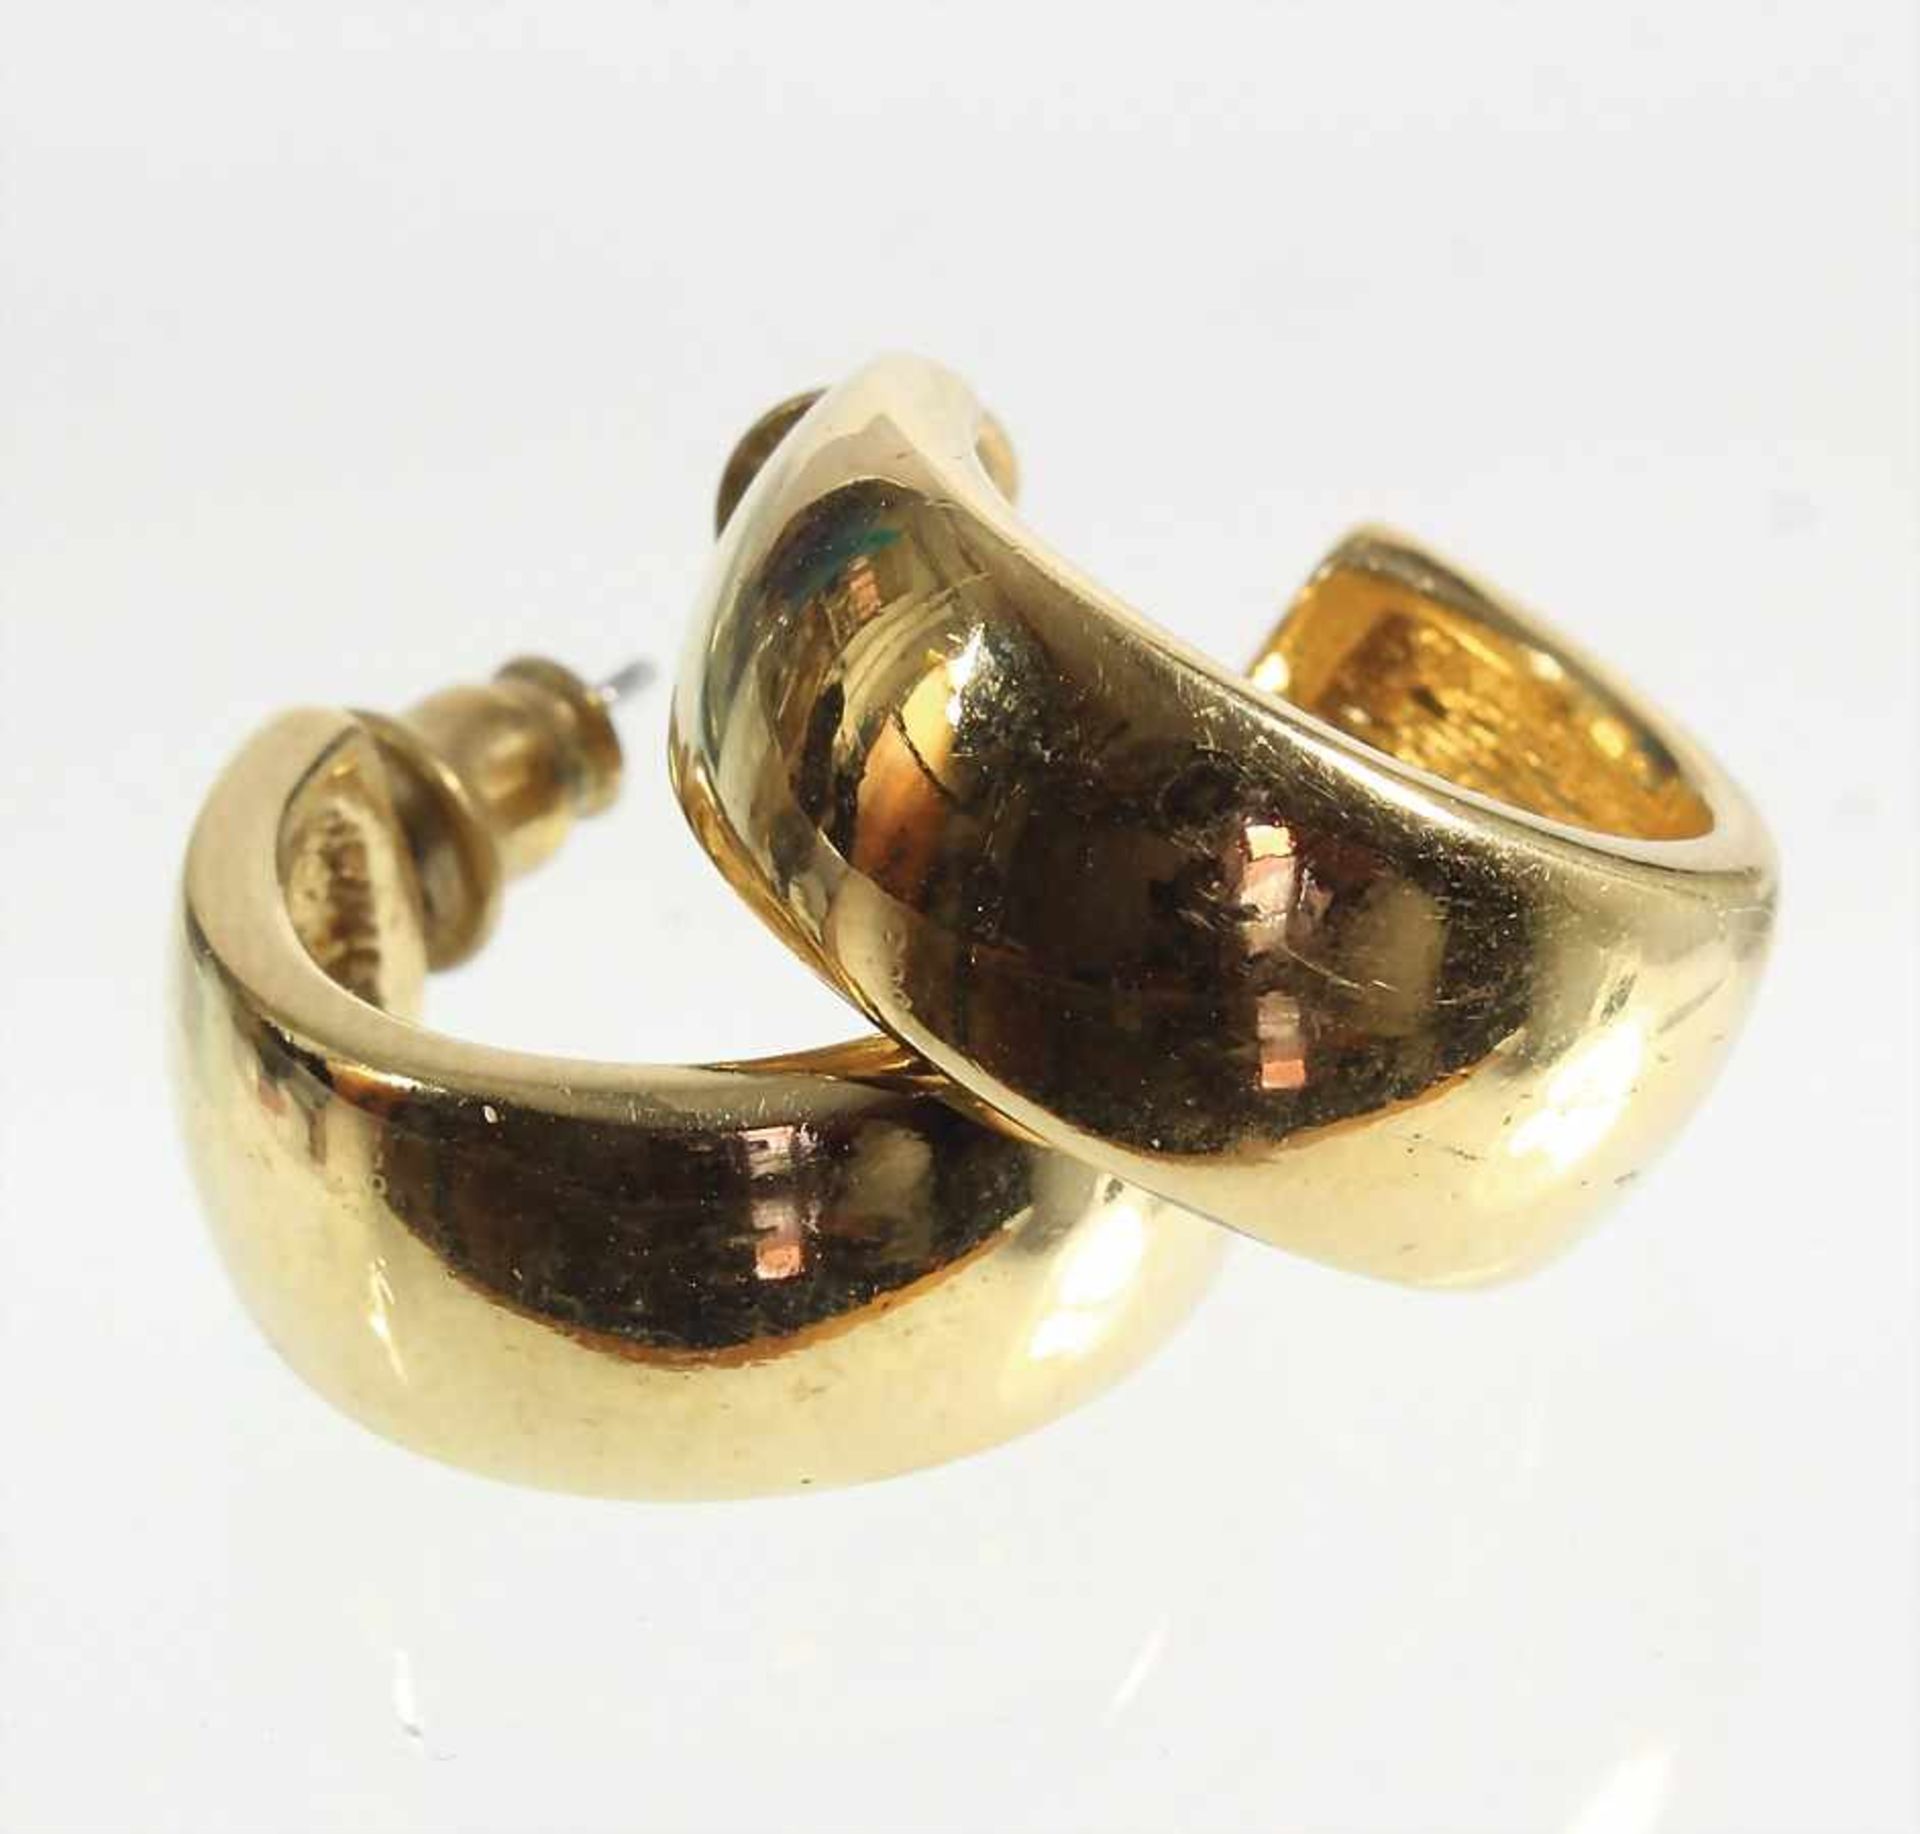 1 Paar Creolen "C. DIOR", Metall goldfarben, sig.: Chr. Dior, B = 9,1 mm, D = 21,0 mm, (3/4